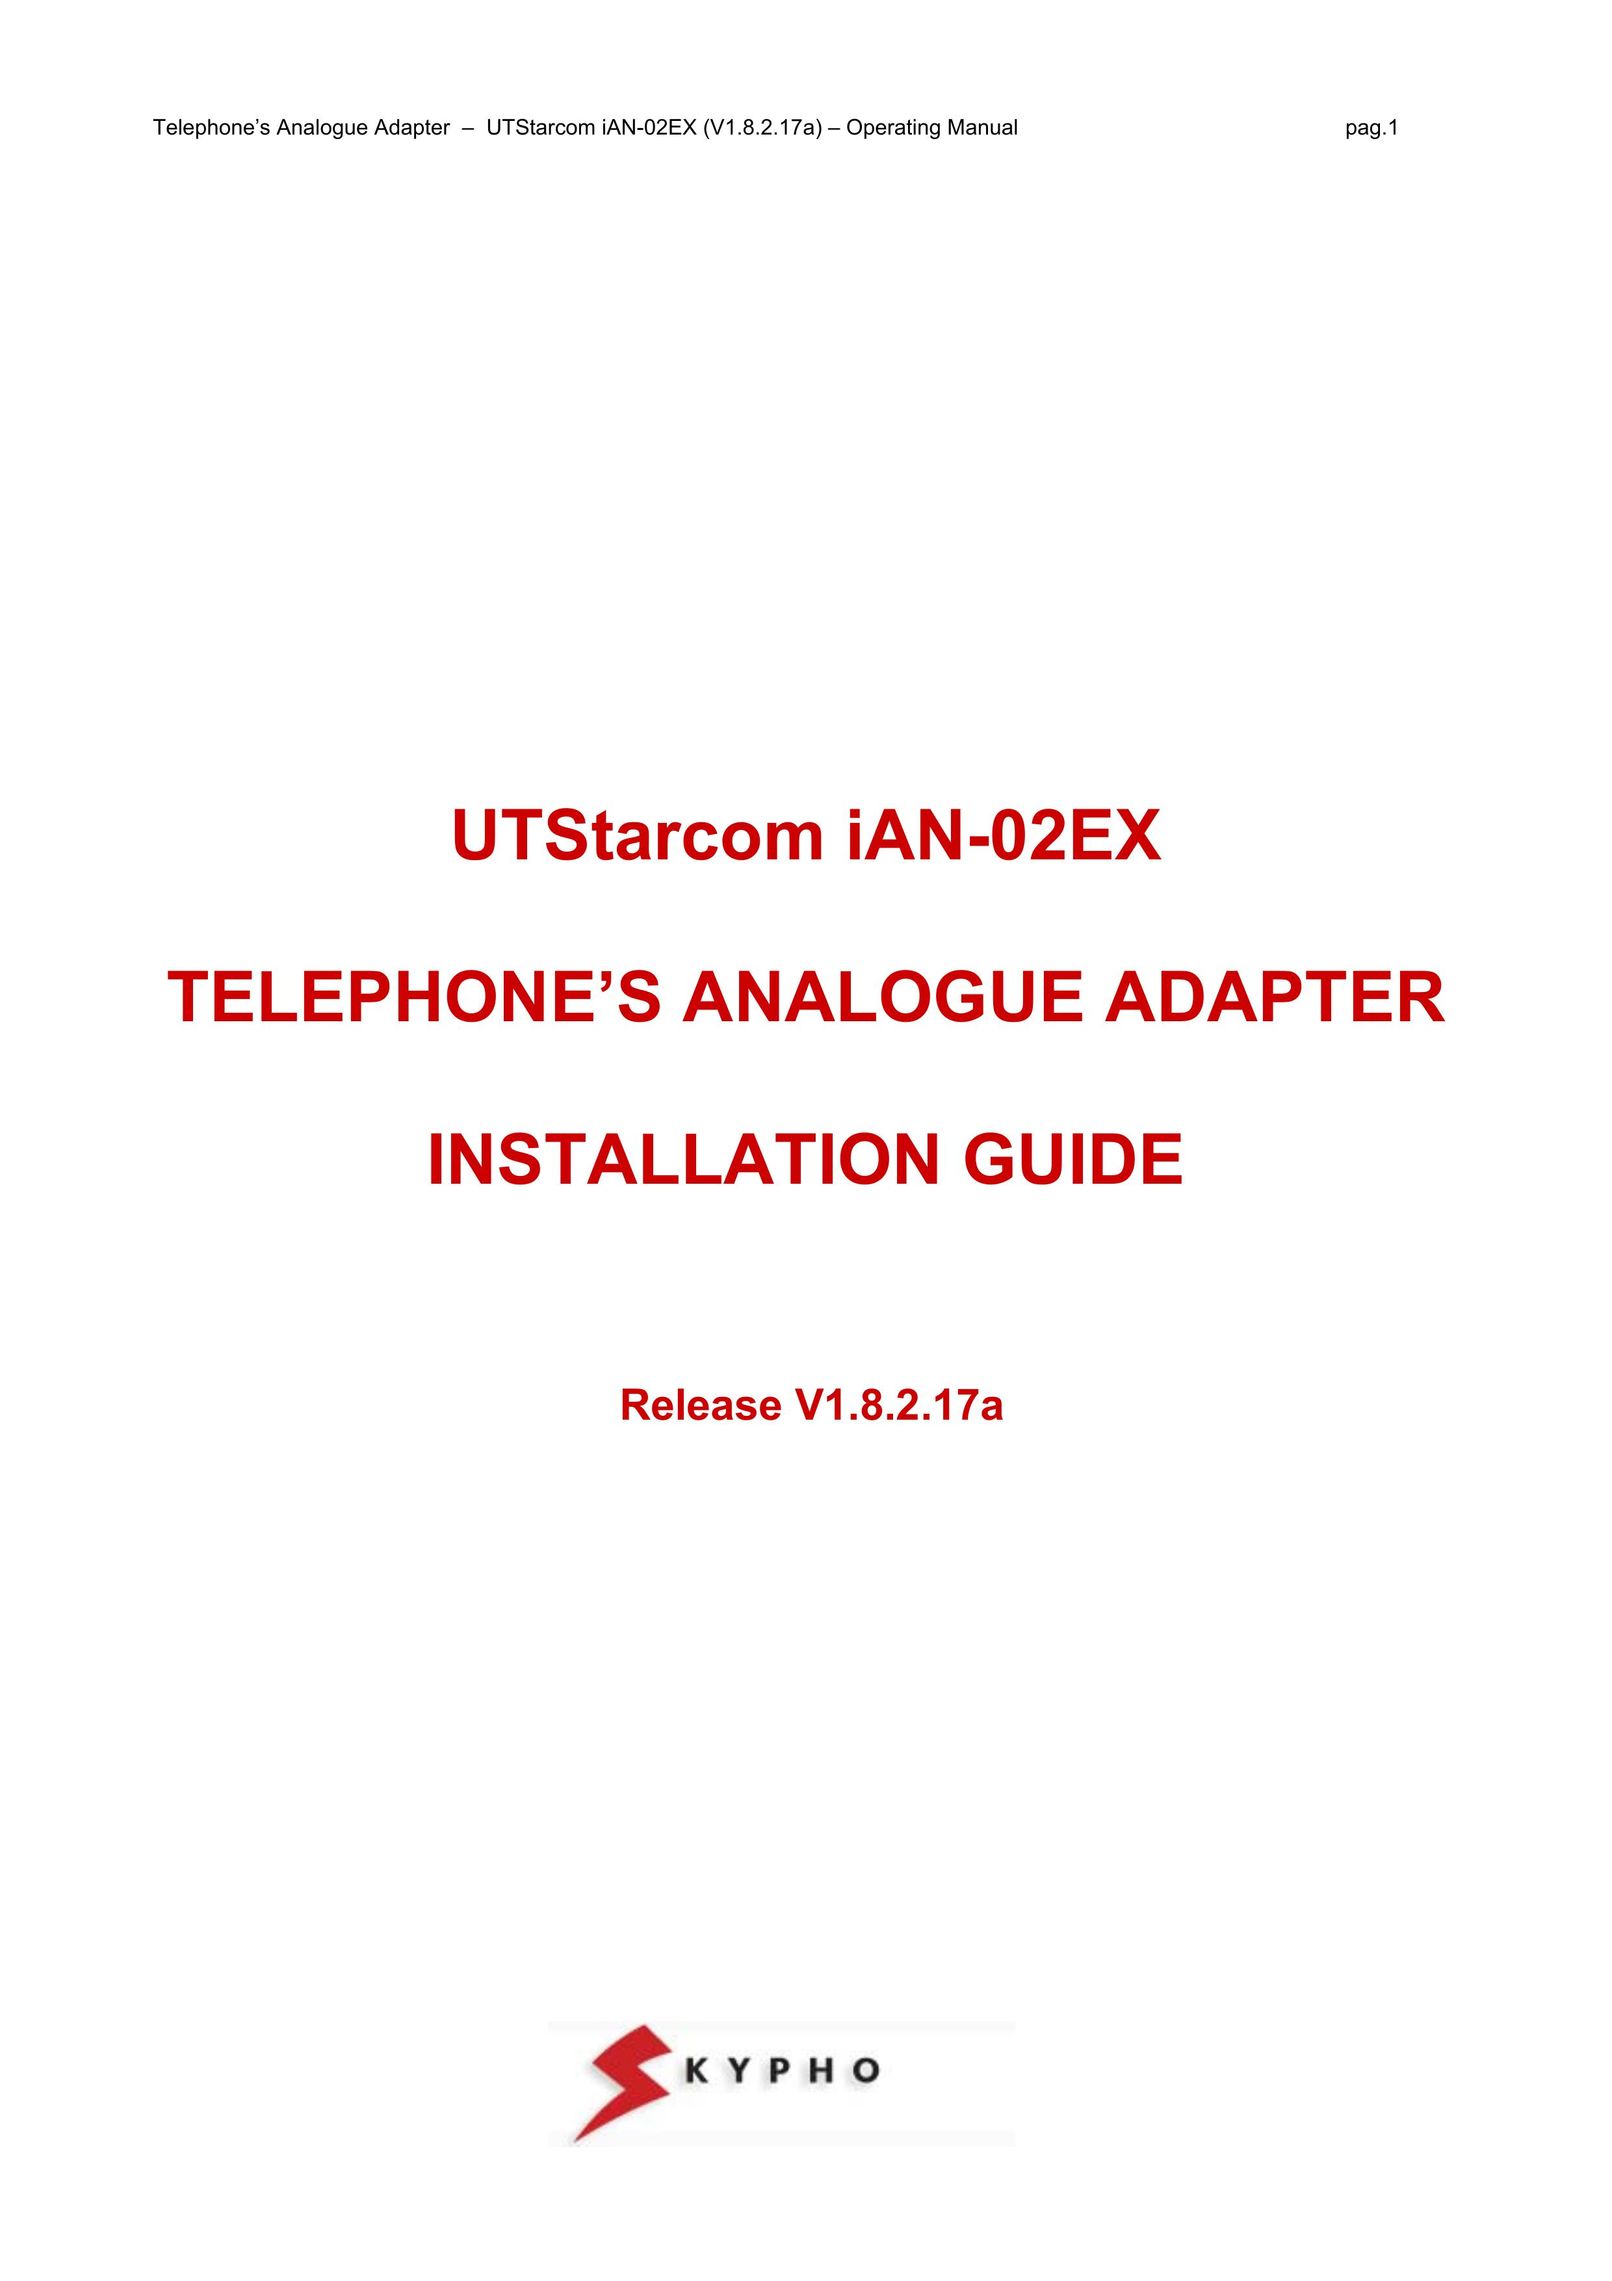 UTStarcom IAN-02EX Telephone Accessories User Manual